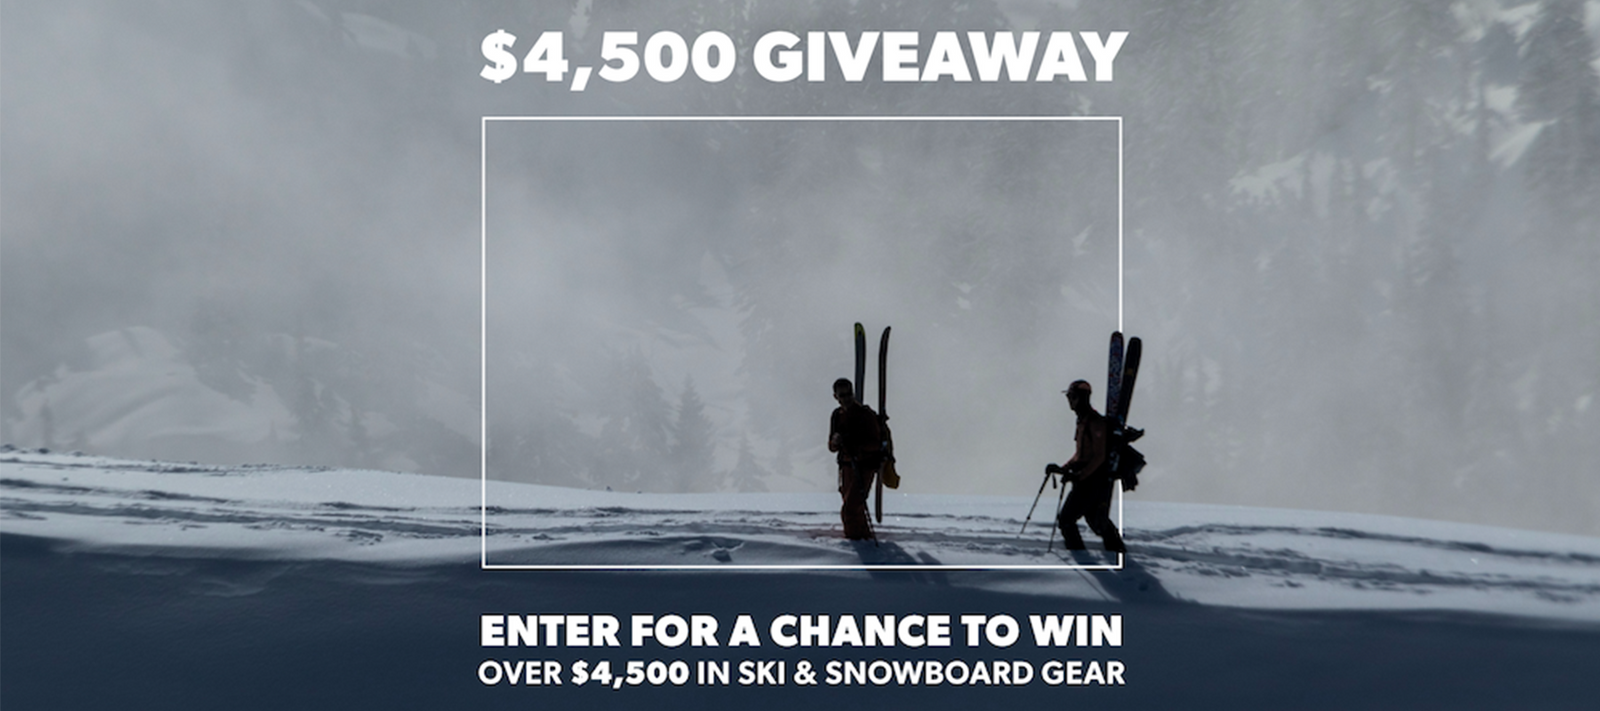 Win $4500 worth of winter gear 🎁